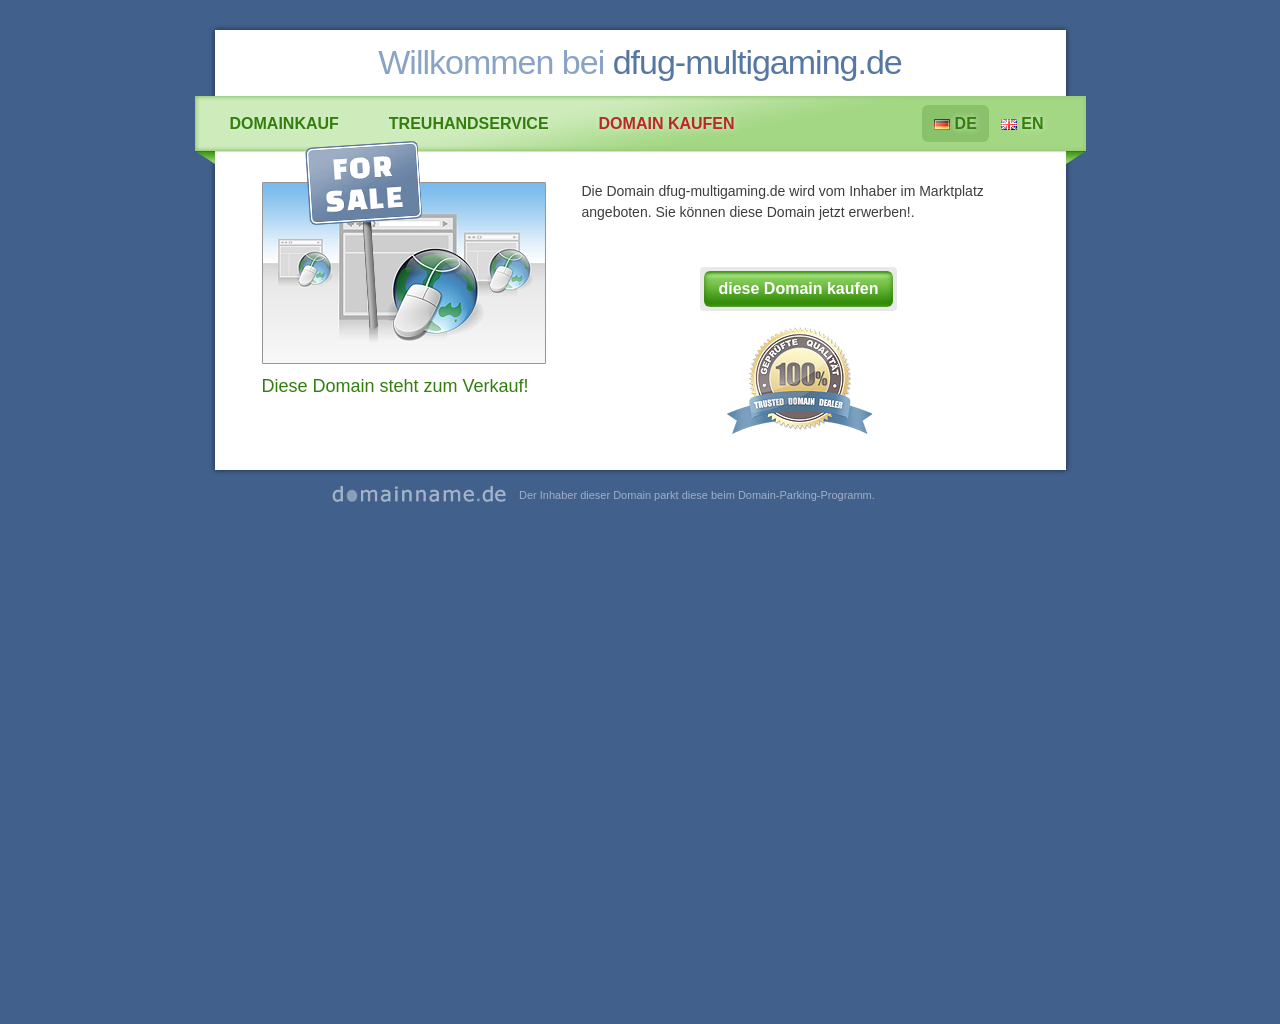 dfug-multigaming.de